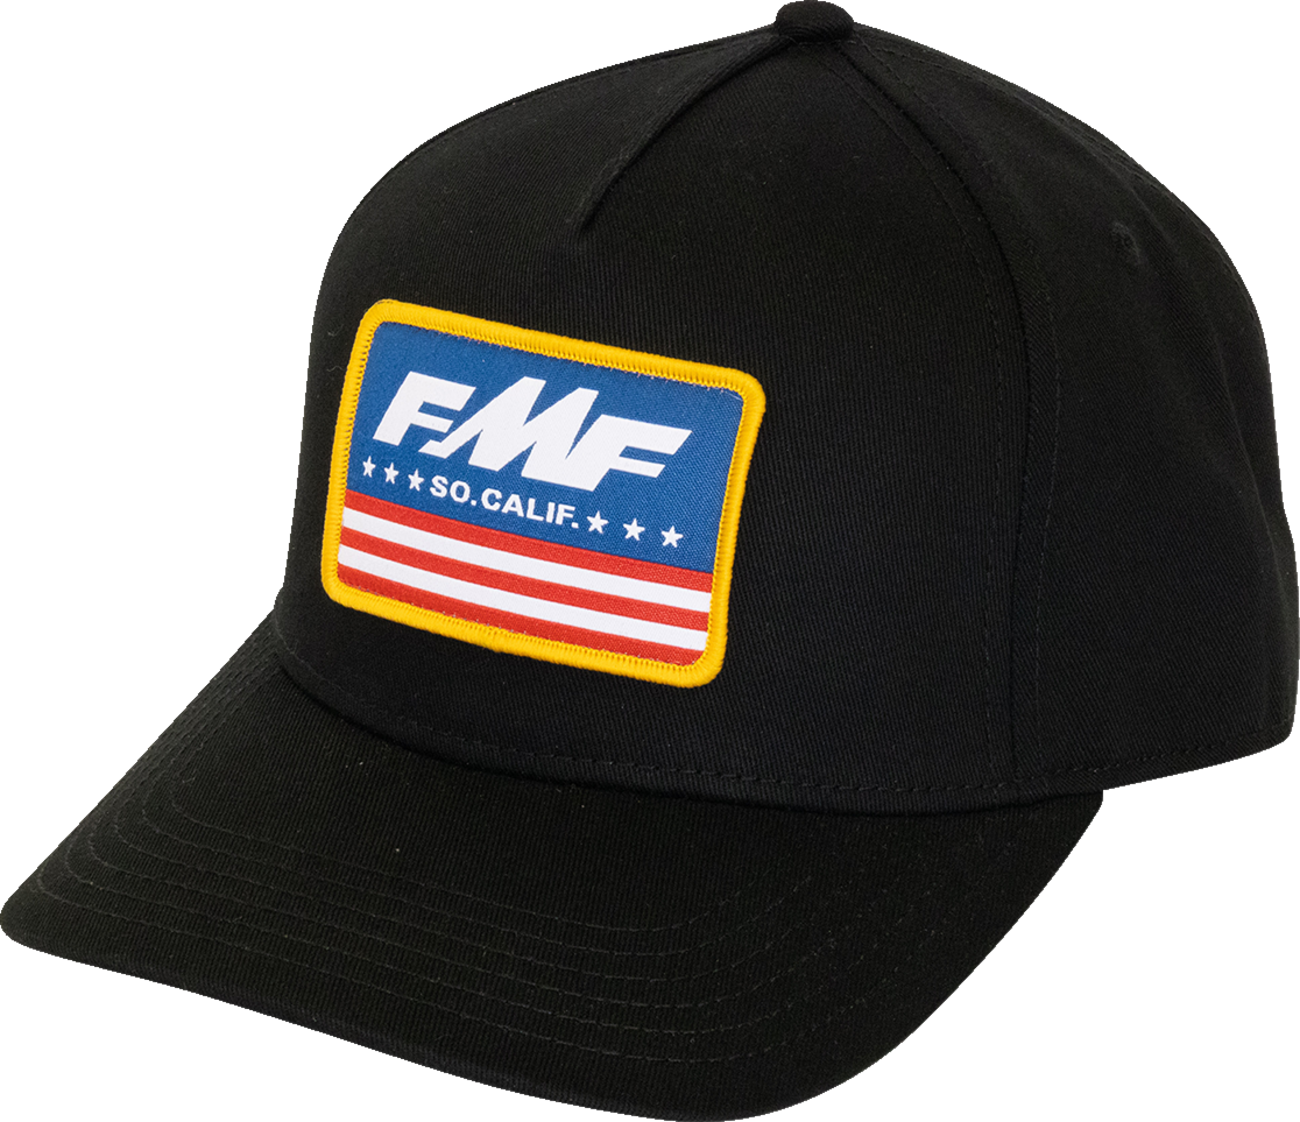 FMF Outsiders Hat - Black SP23196907BLK 2501-4058